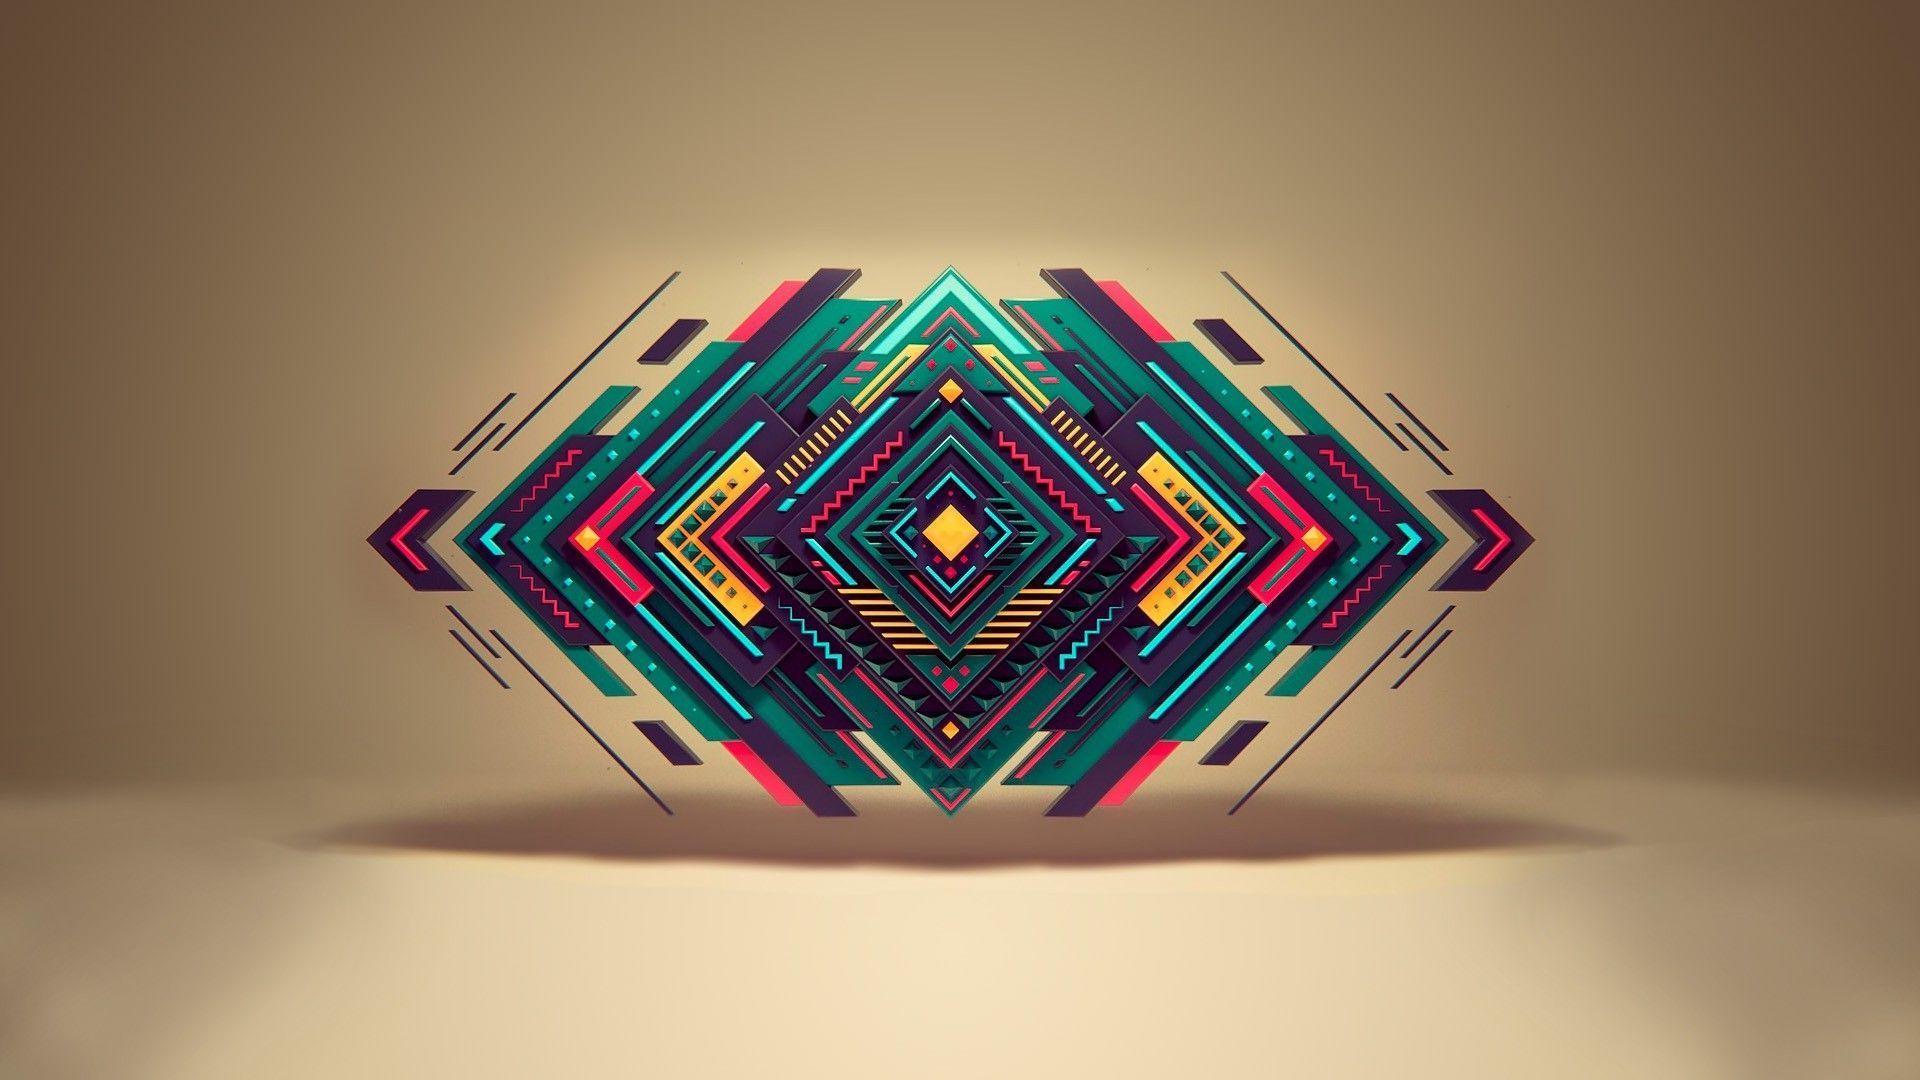 Diamond shape Wallpaper. Fondo geométrico, Papel tapiz abstracto